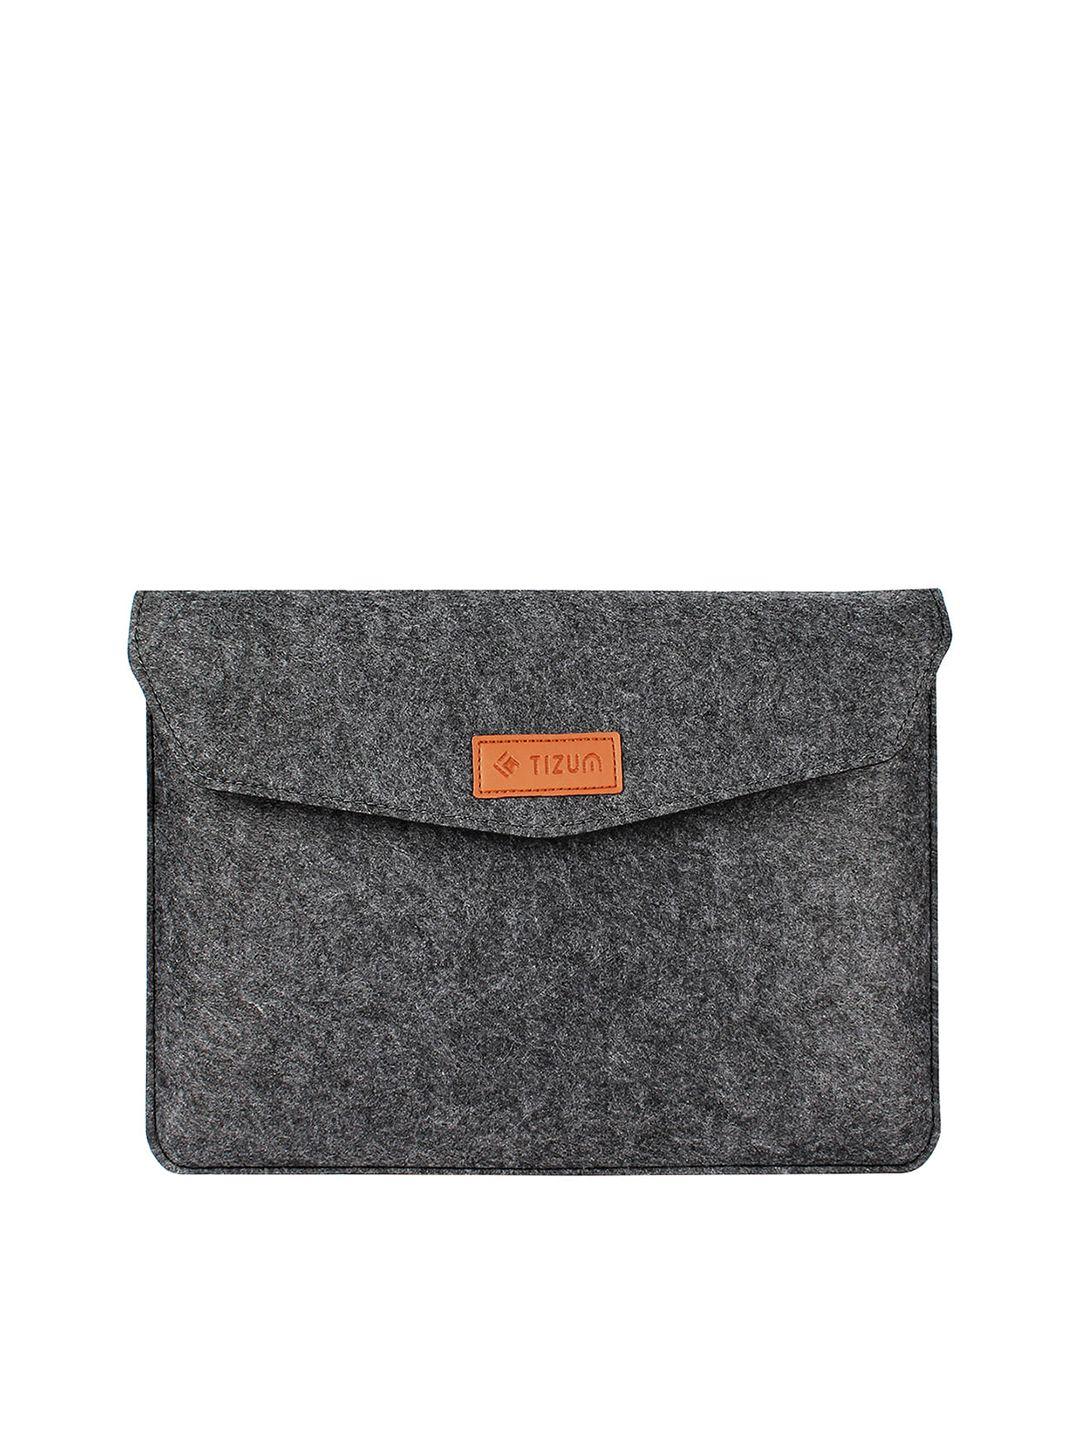 tizum unisex grey 13 to 13.3 inch laptop sleeve